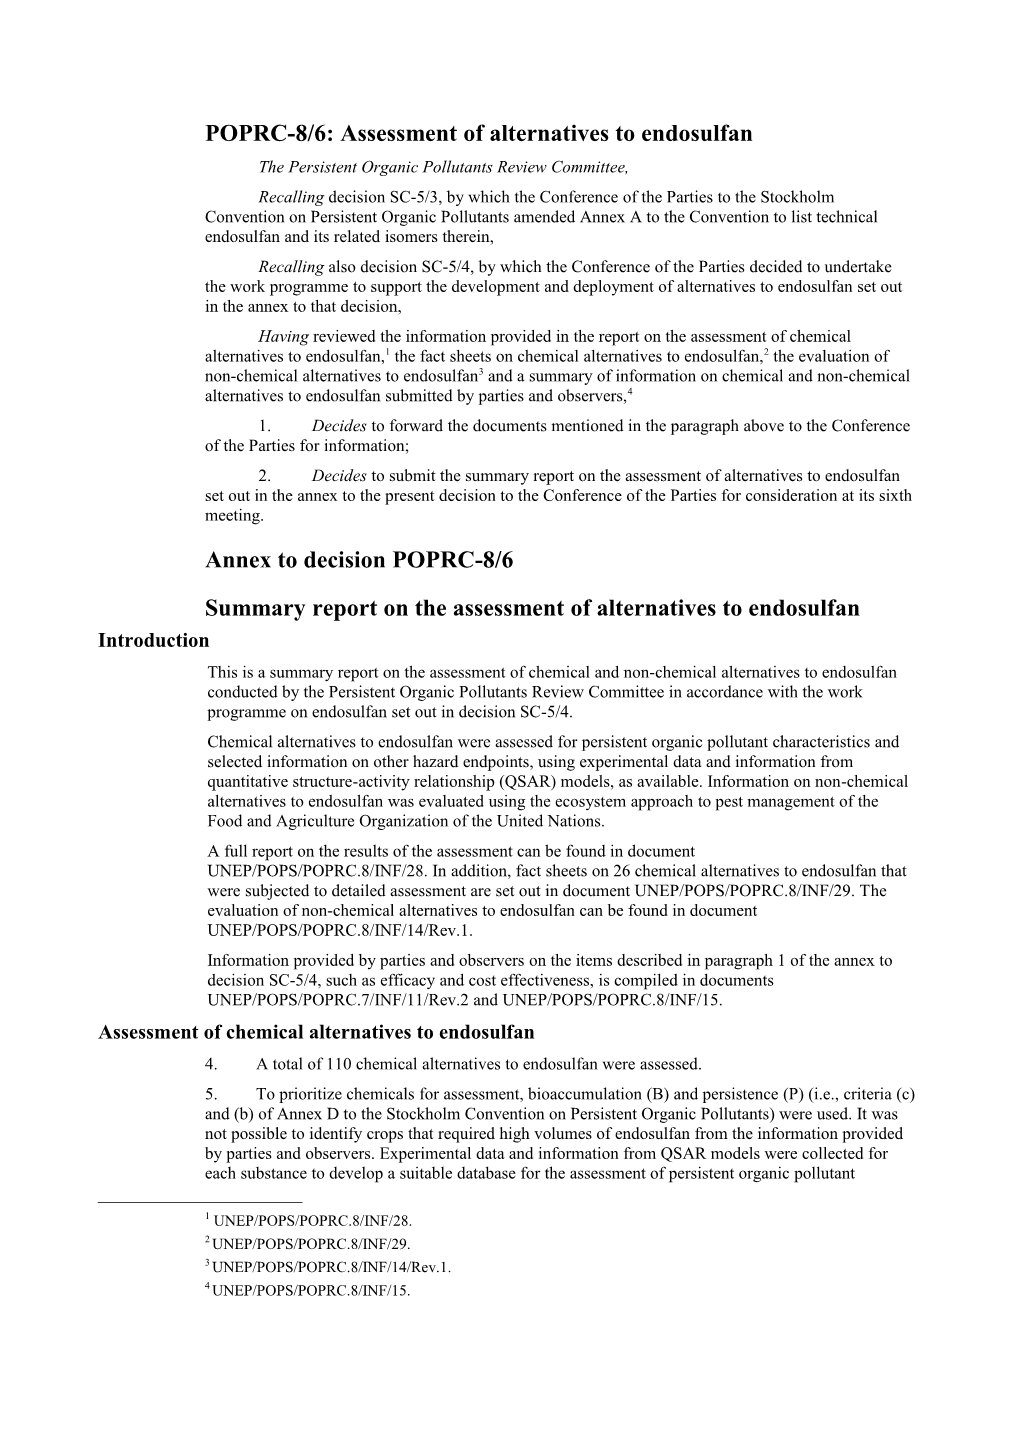 POPRC-8/6: Assessment of Alternatives to Endosulfan